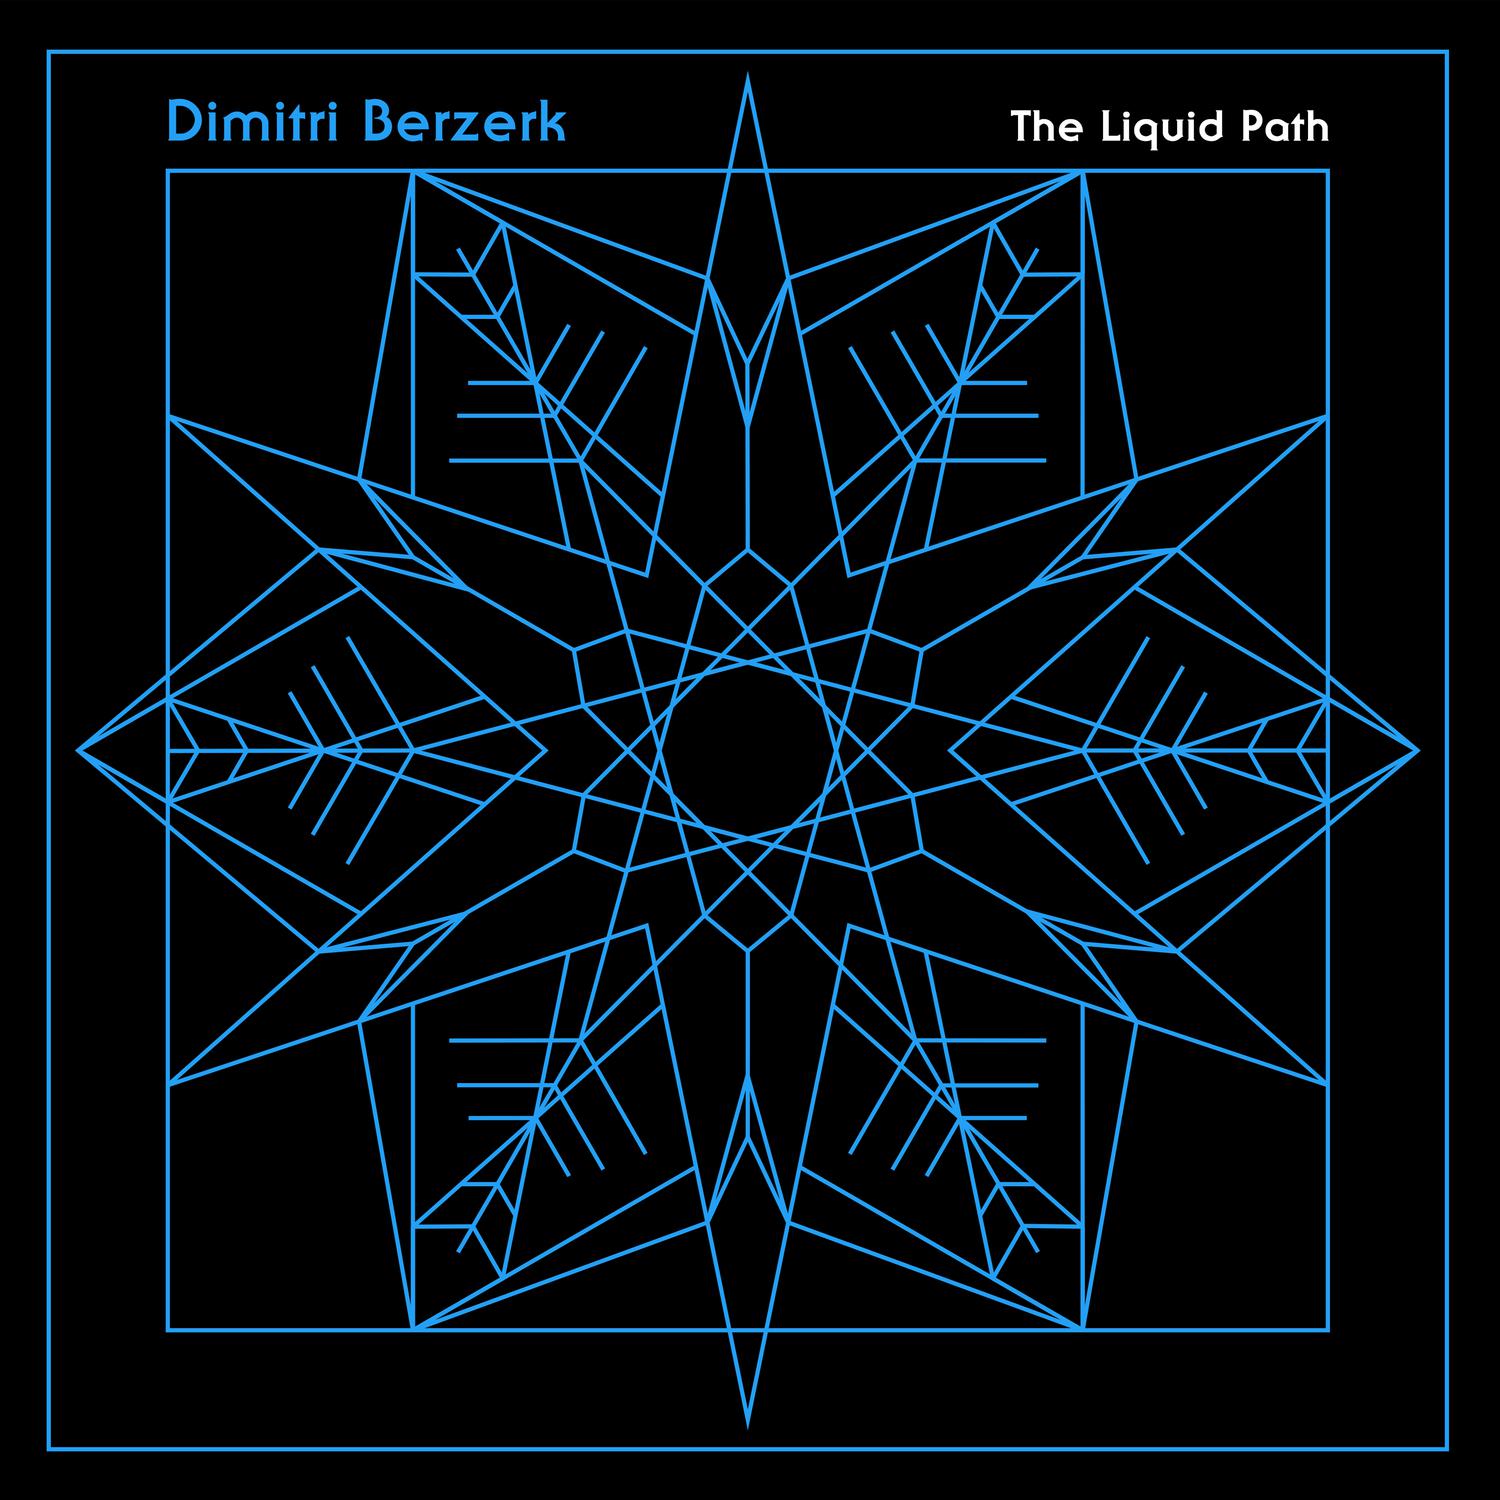 Dimitri Berzerk - Sailing Through Uncertainty